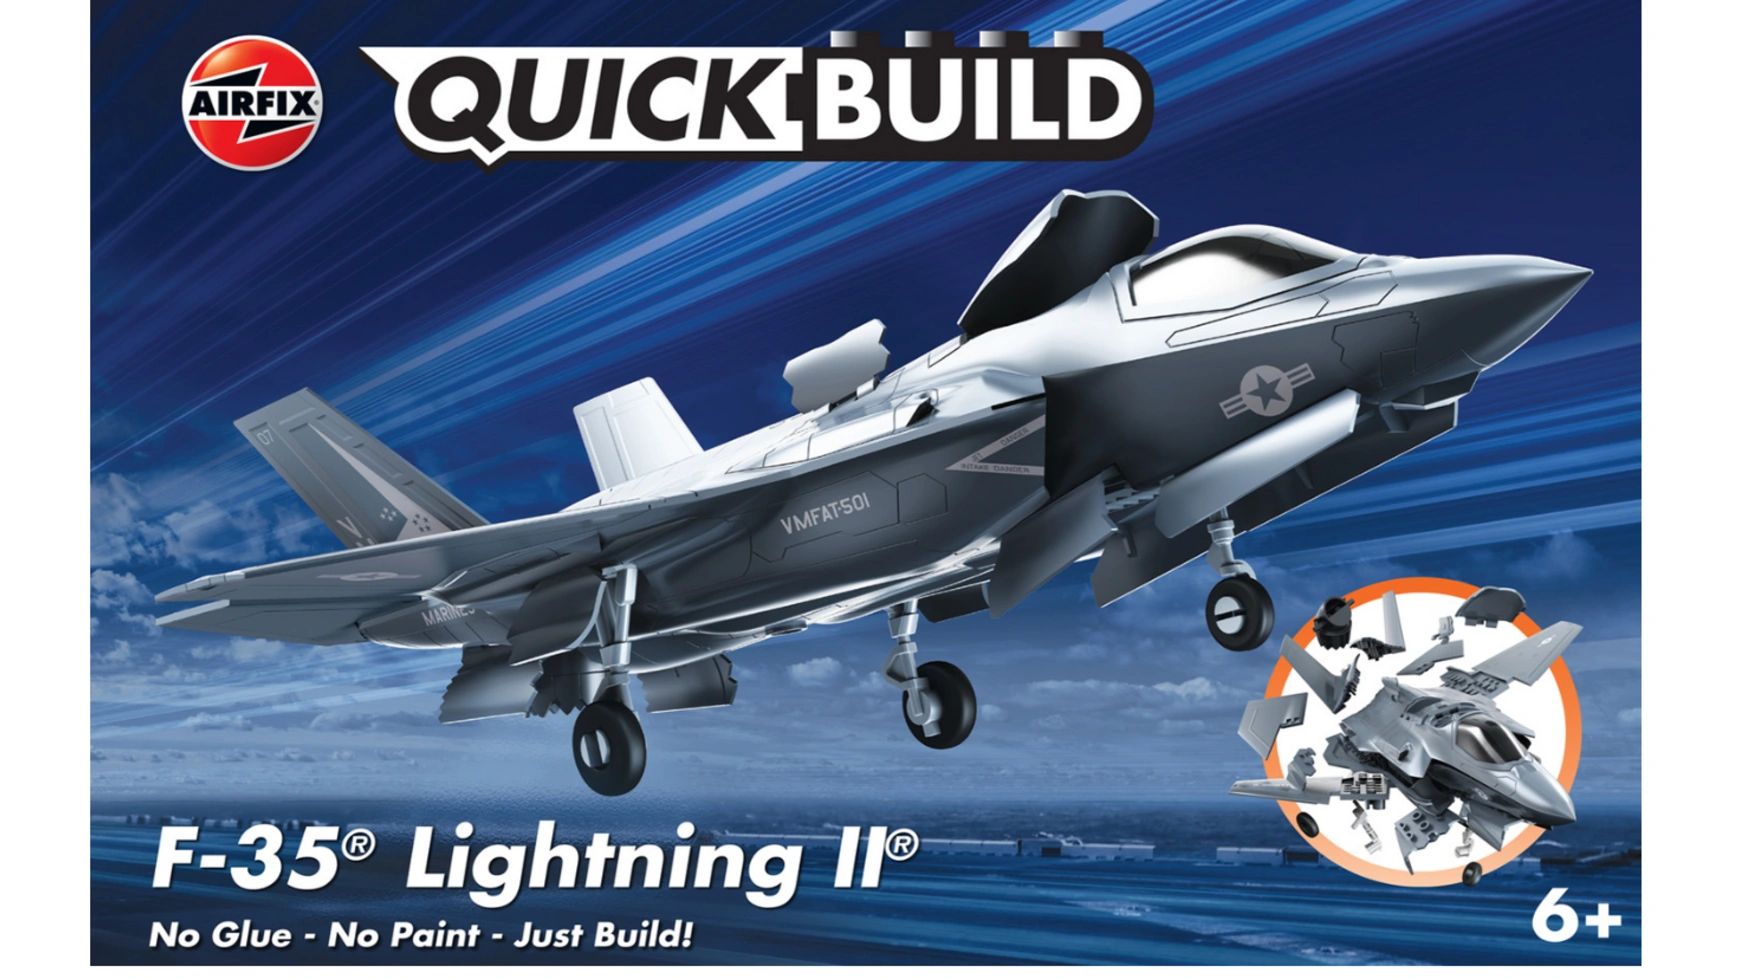 Airfix QUICKBUILD F-35B Lightning II